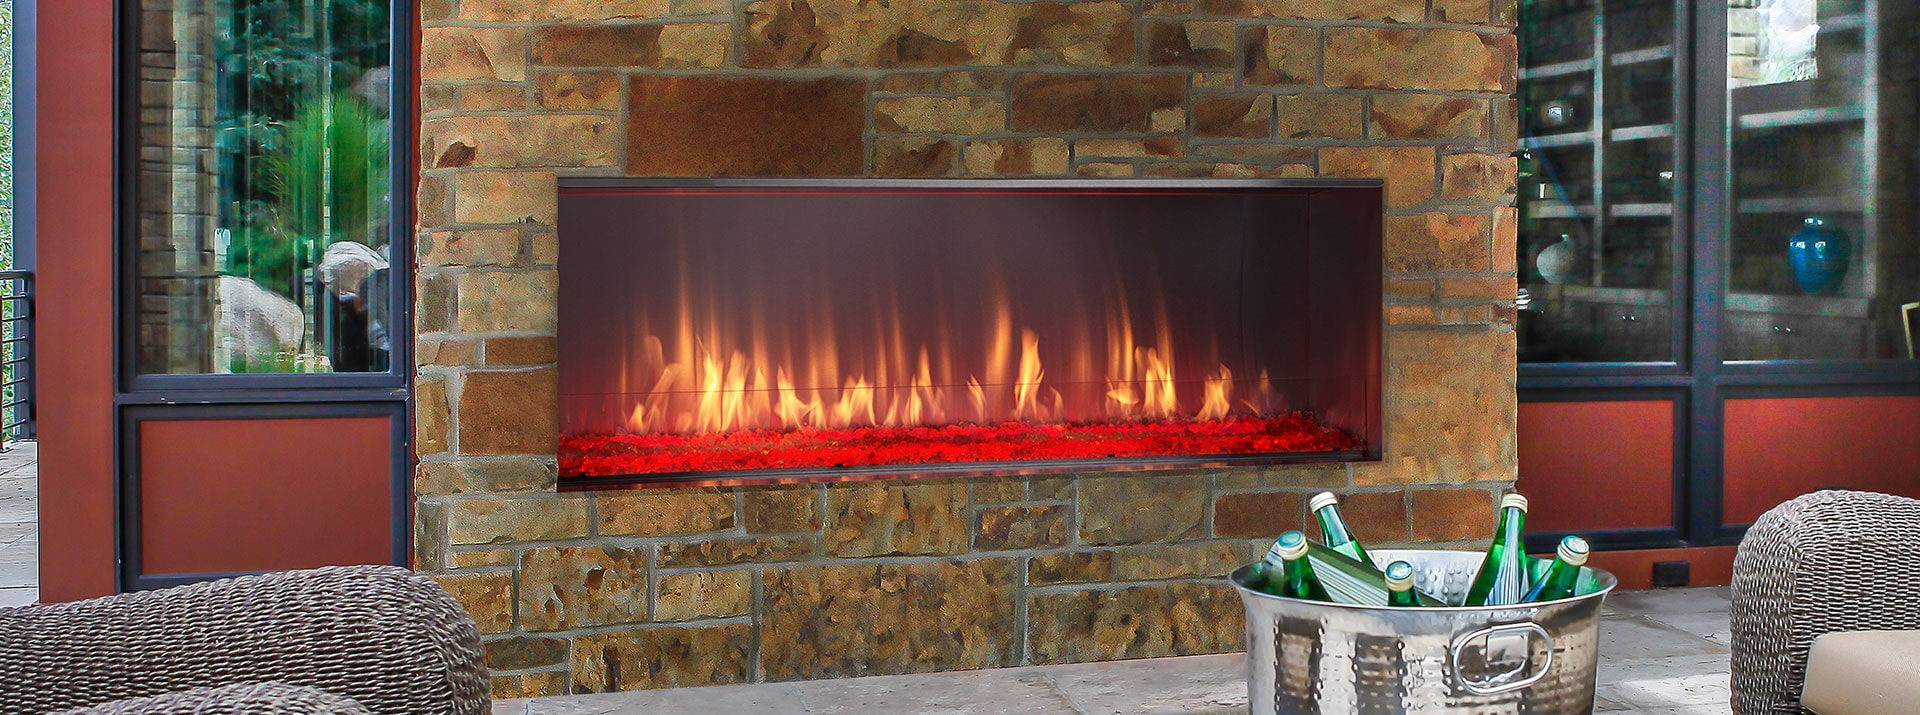 Outdoor Wood Fireplace Insert Elegant Lanai Gas Outdoor Fireplace